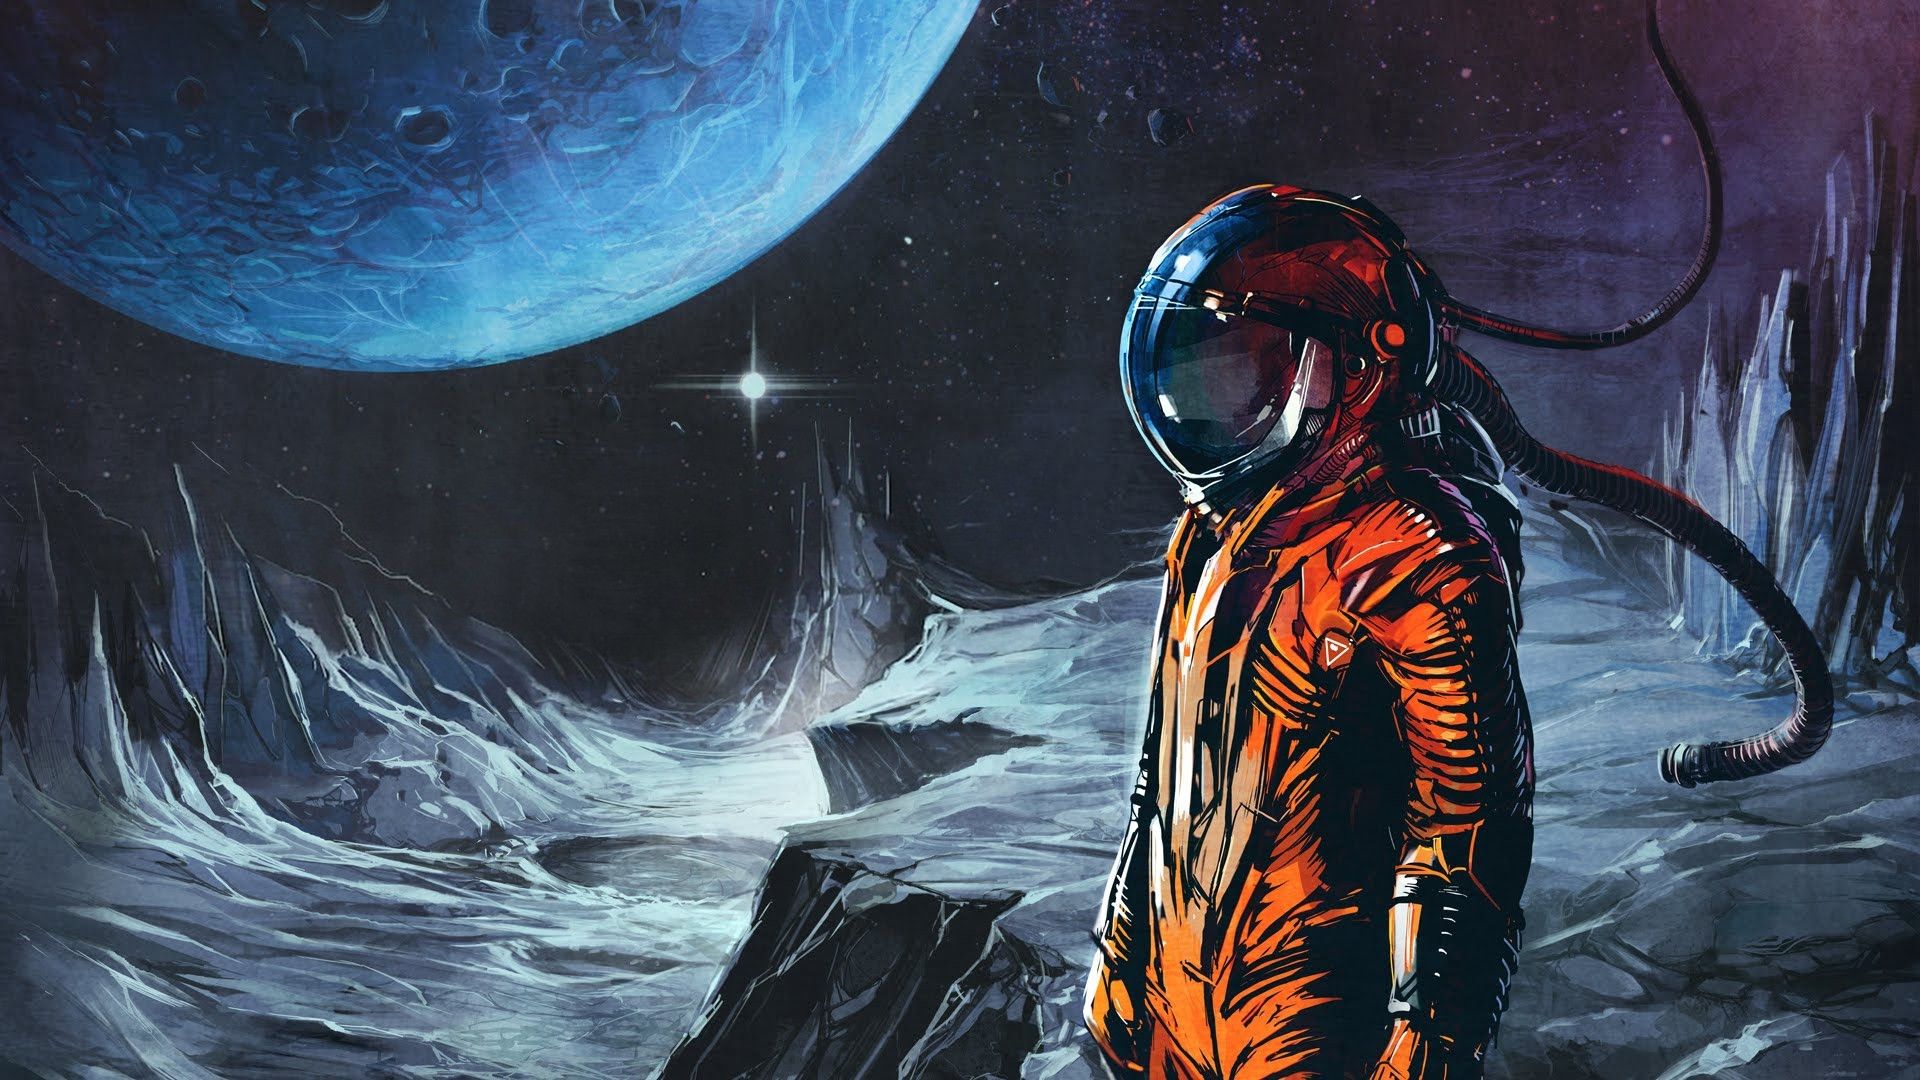 fantasy Art, Science Fiction, Space Suit Wallpaper HD / Desktop and Mobile Background